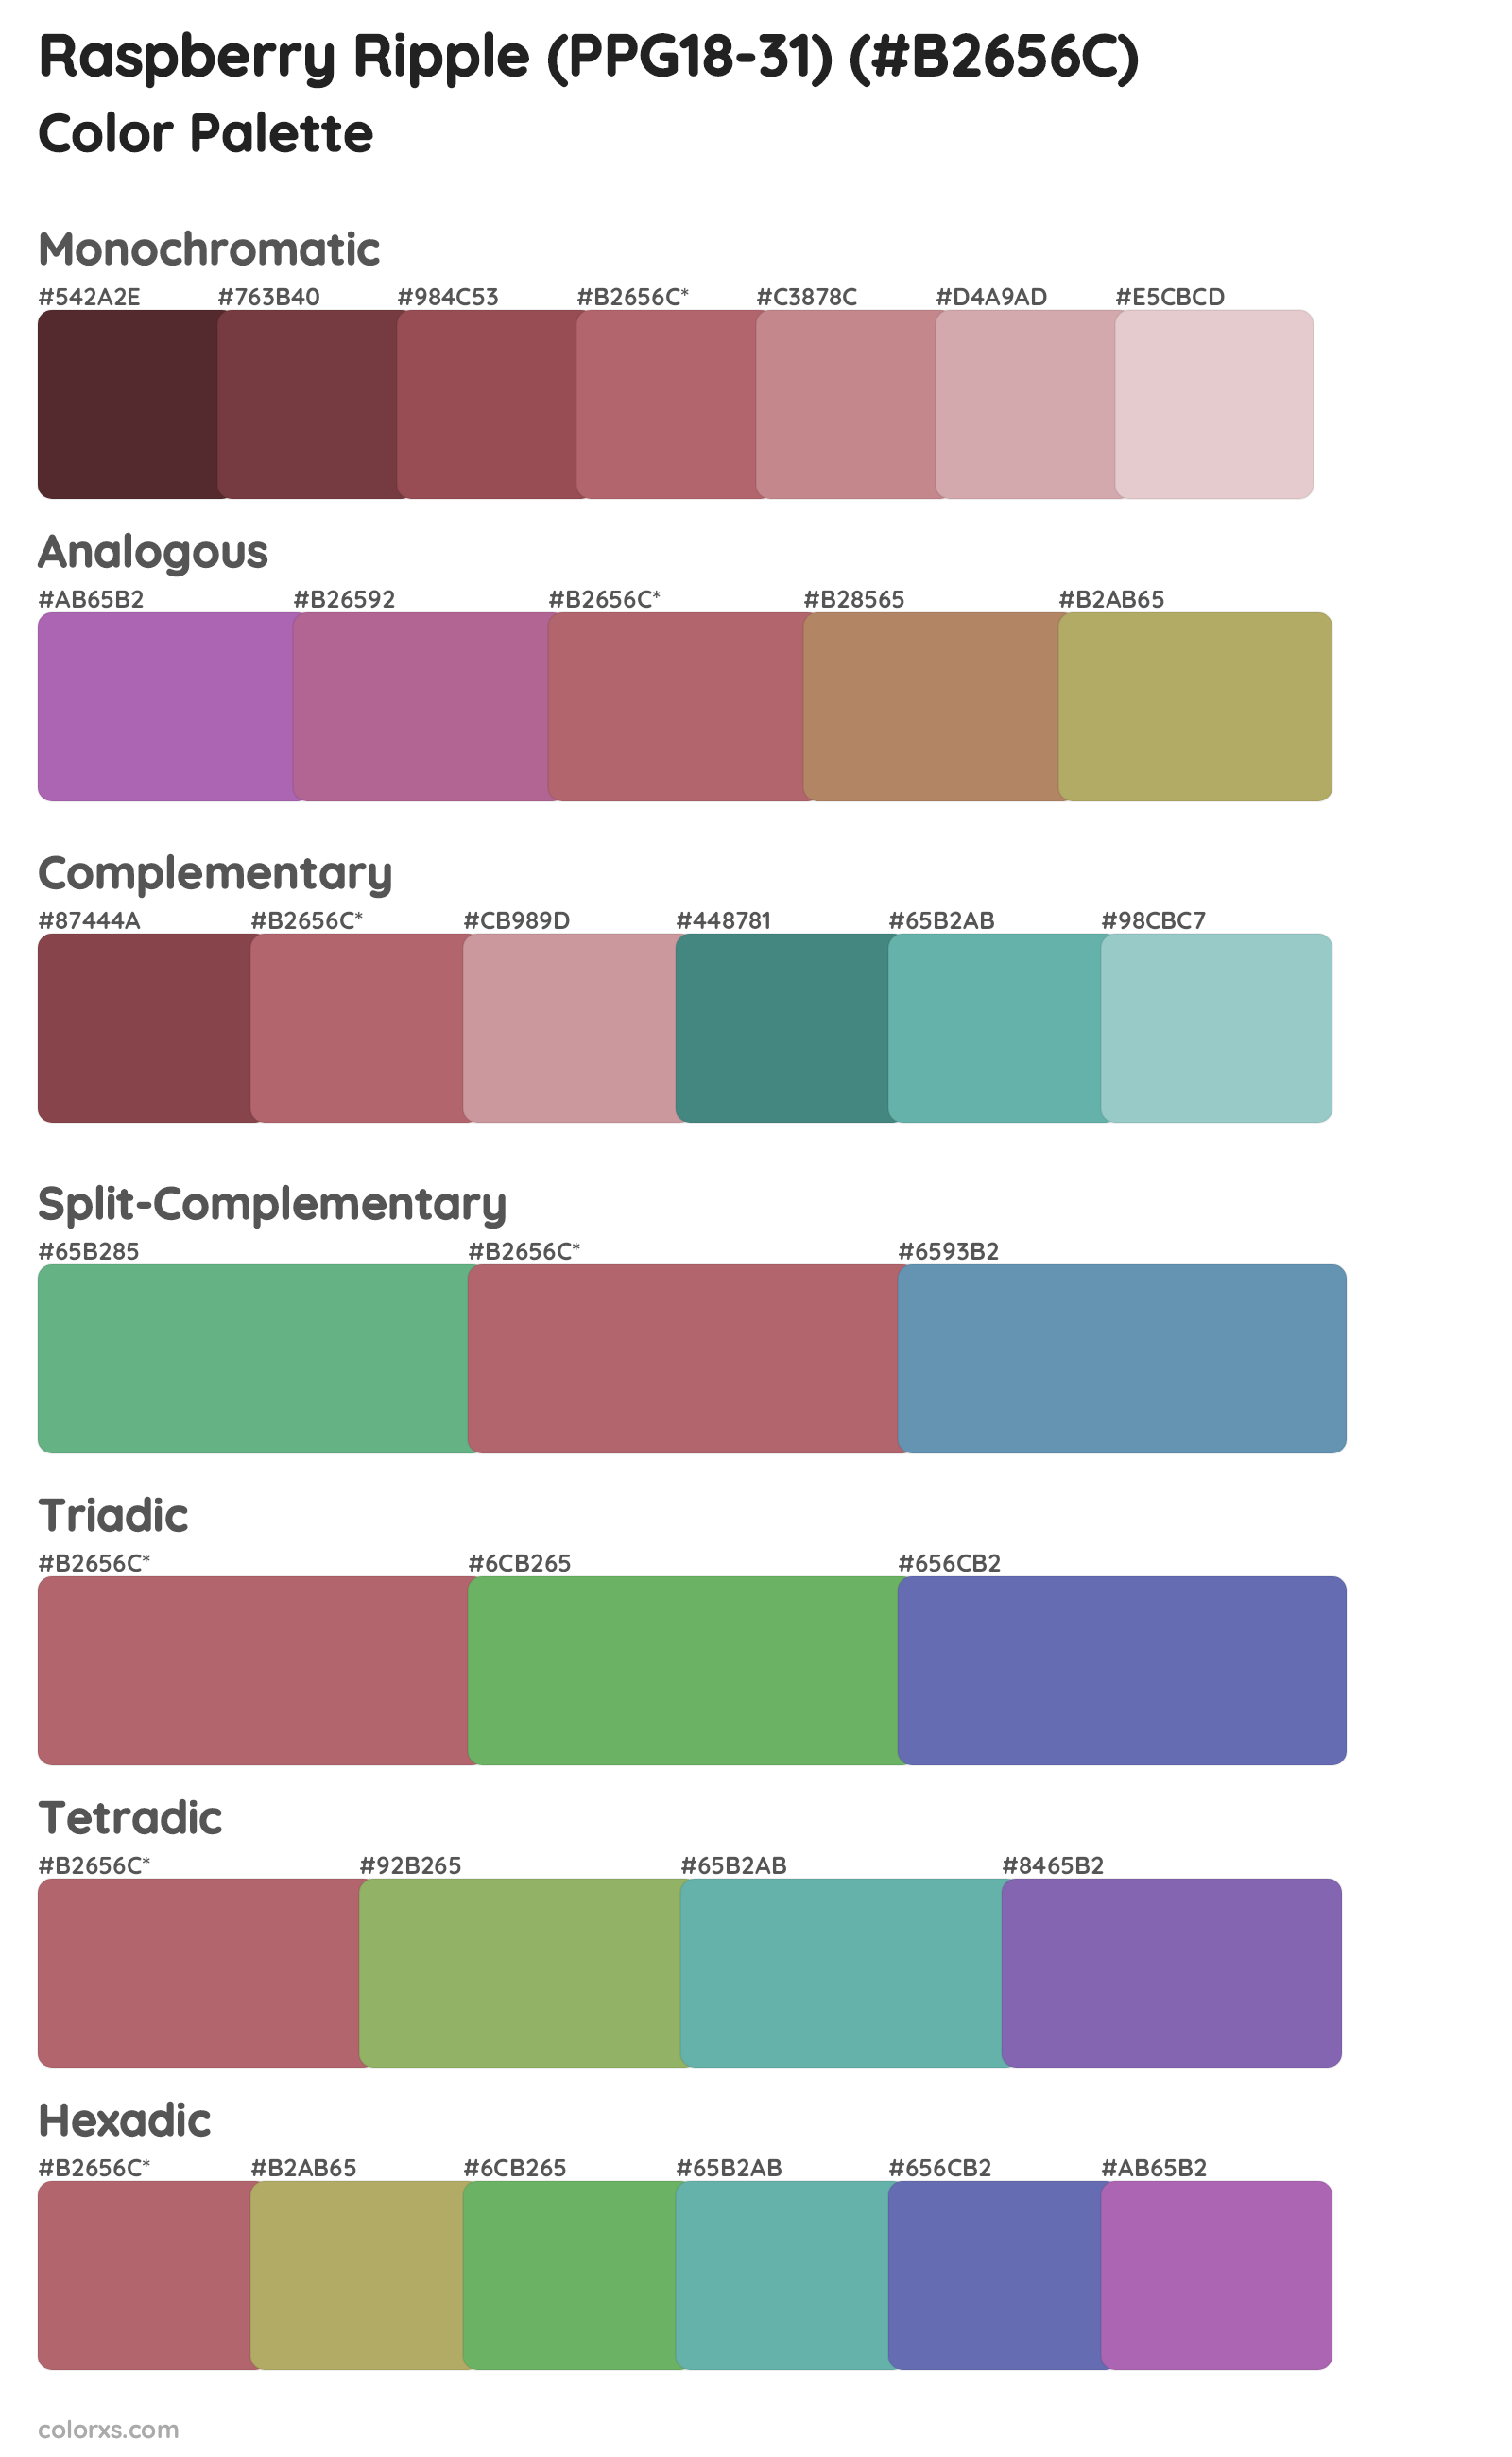 Raspberry Ripple (PPG18-31) Color Scheme Palettes